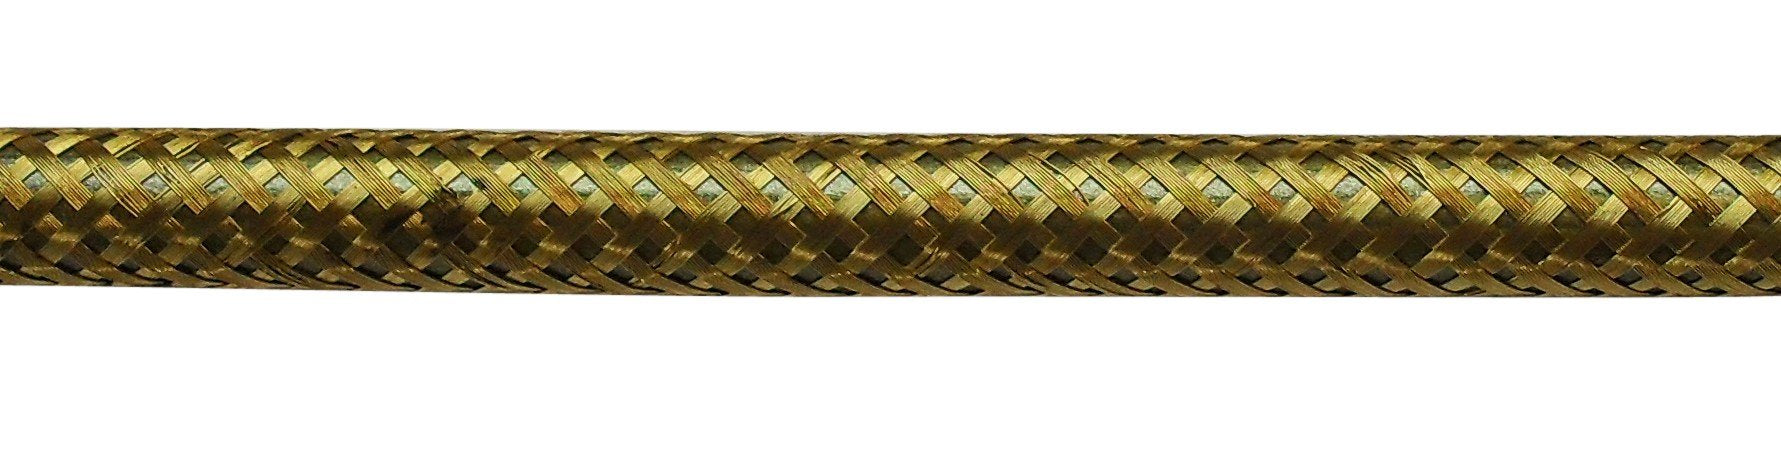 01022 Round Metal Braided Flex 3 core 0.5mm Brass, mtr - Lampfix - Sparks Warehouse